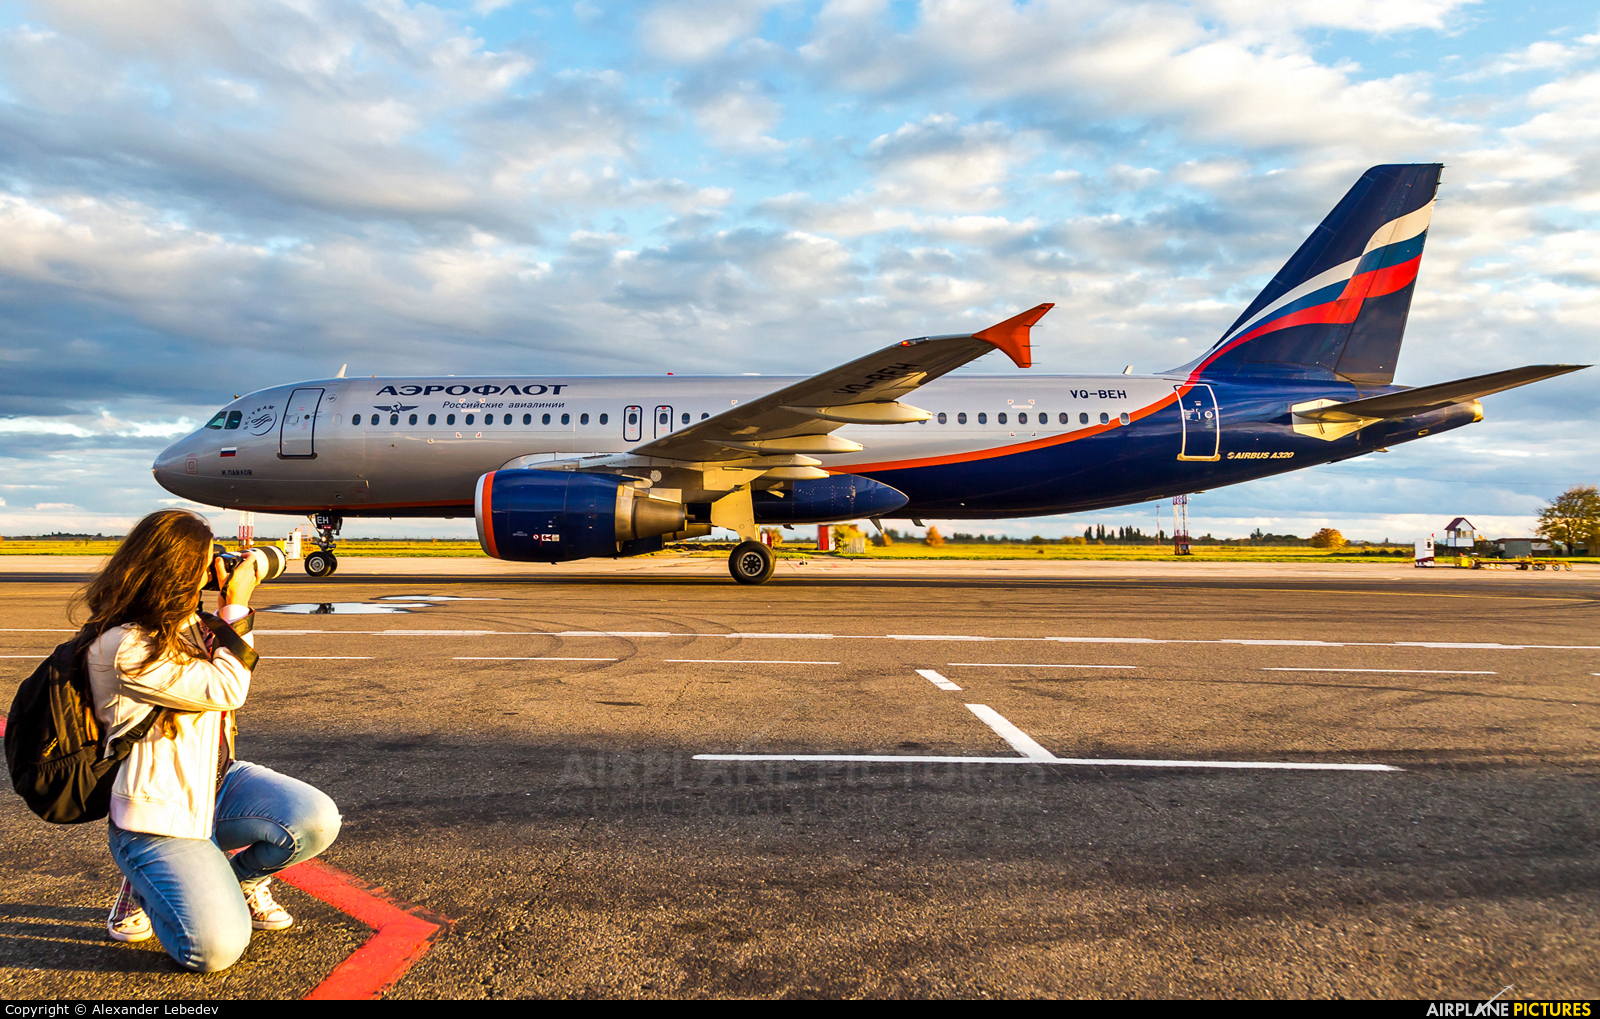 Aeroflot VQ-BEH aircraft at Krasnodar